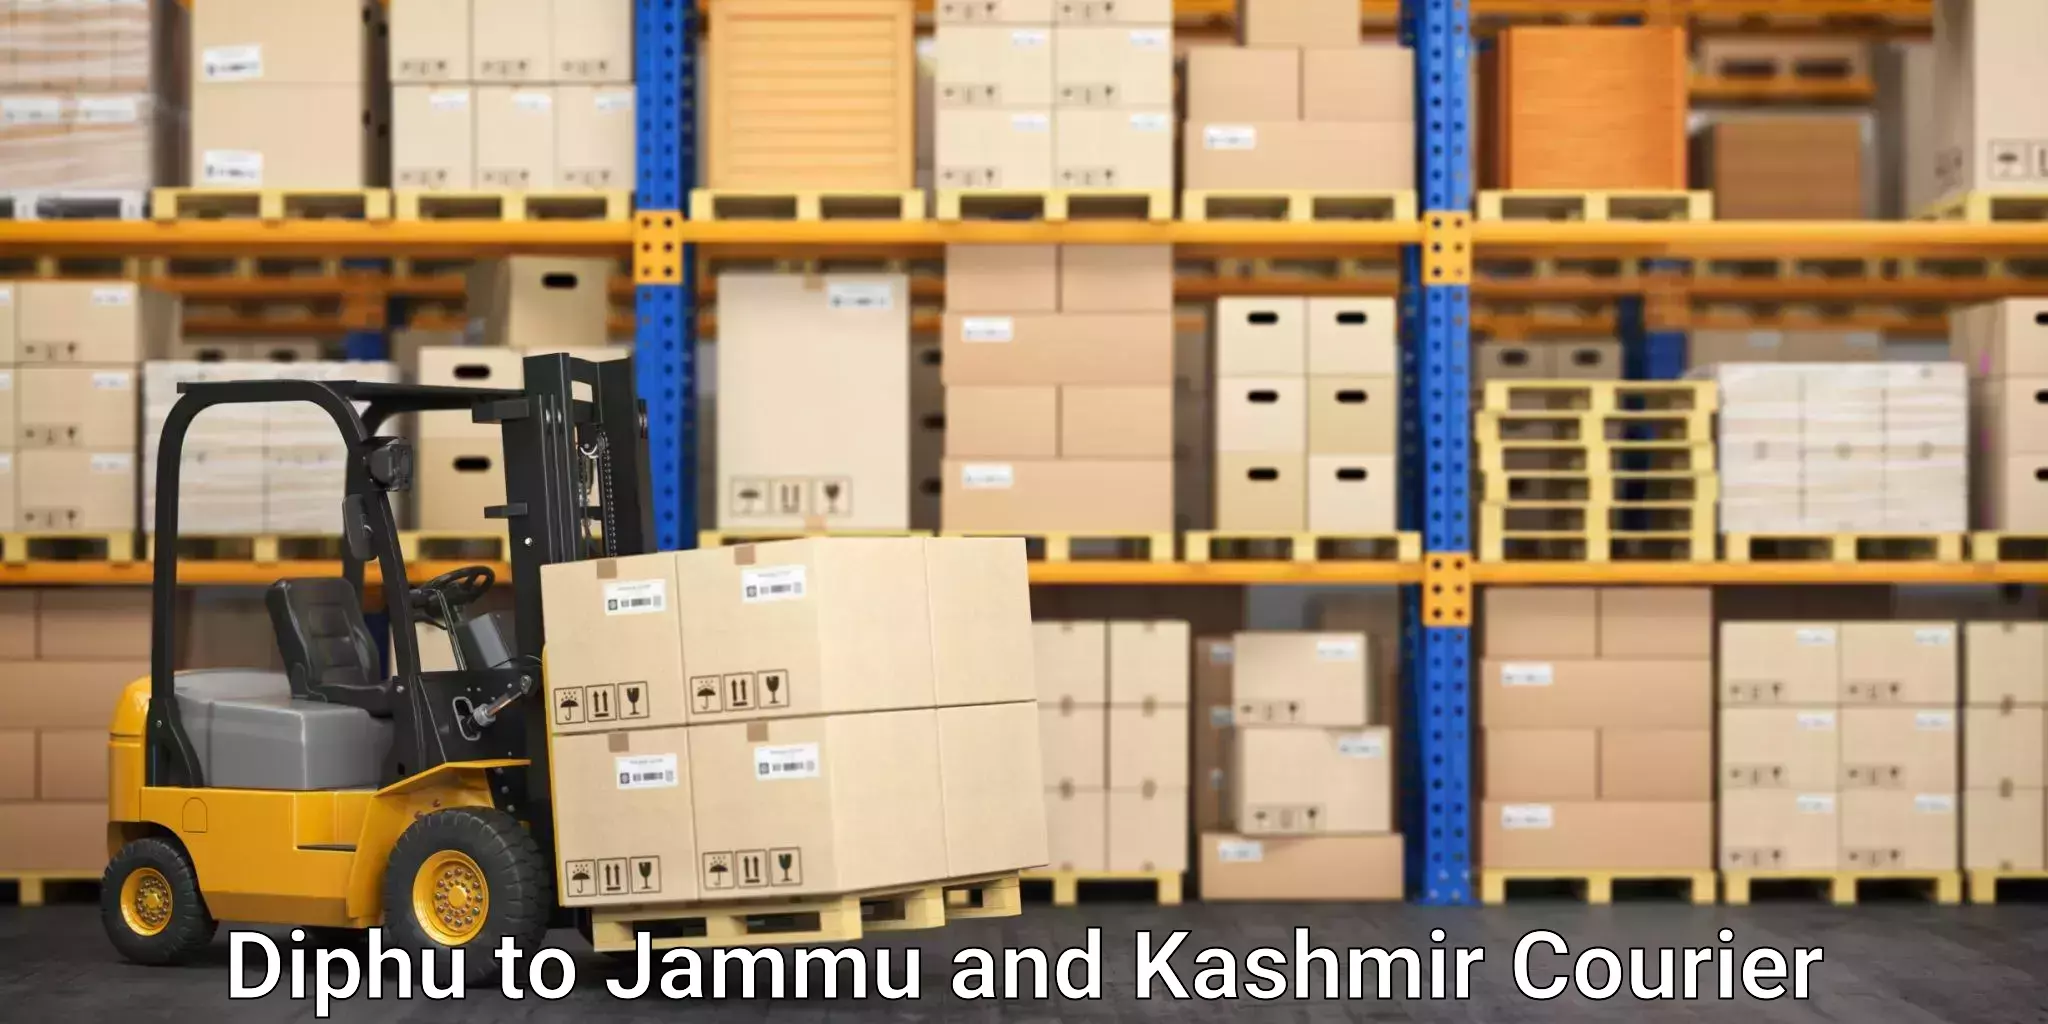 Automated parcel services Diphu to Srinagar Kashmir